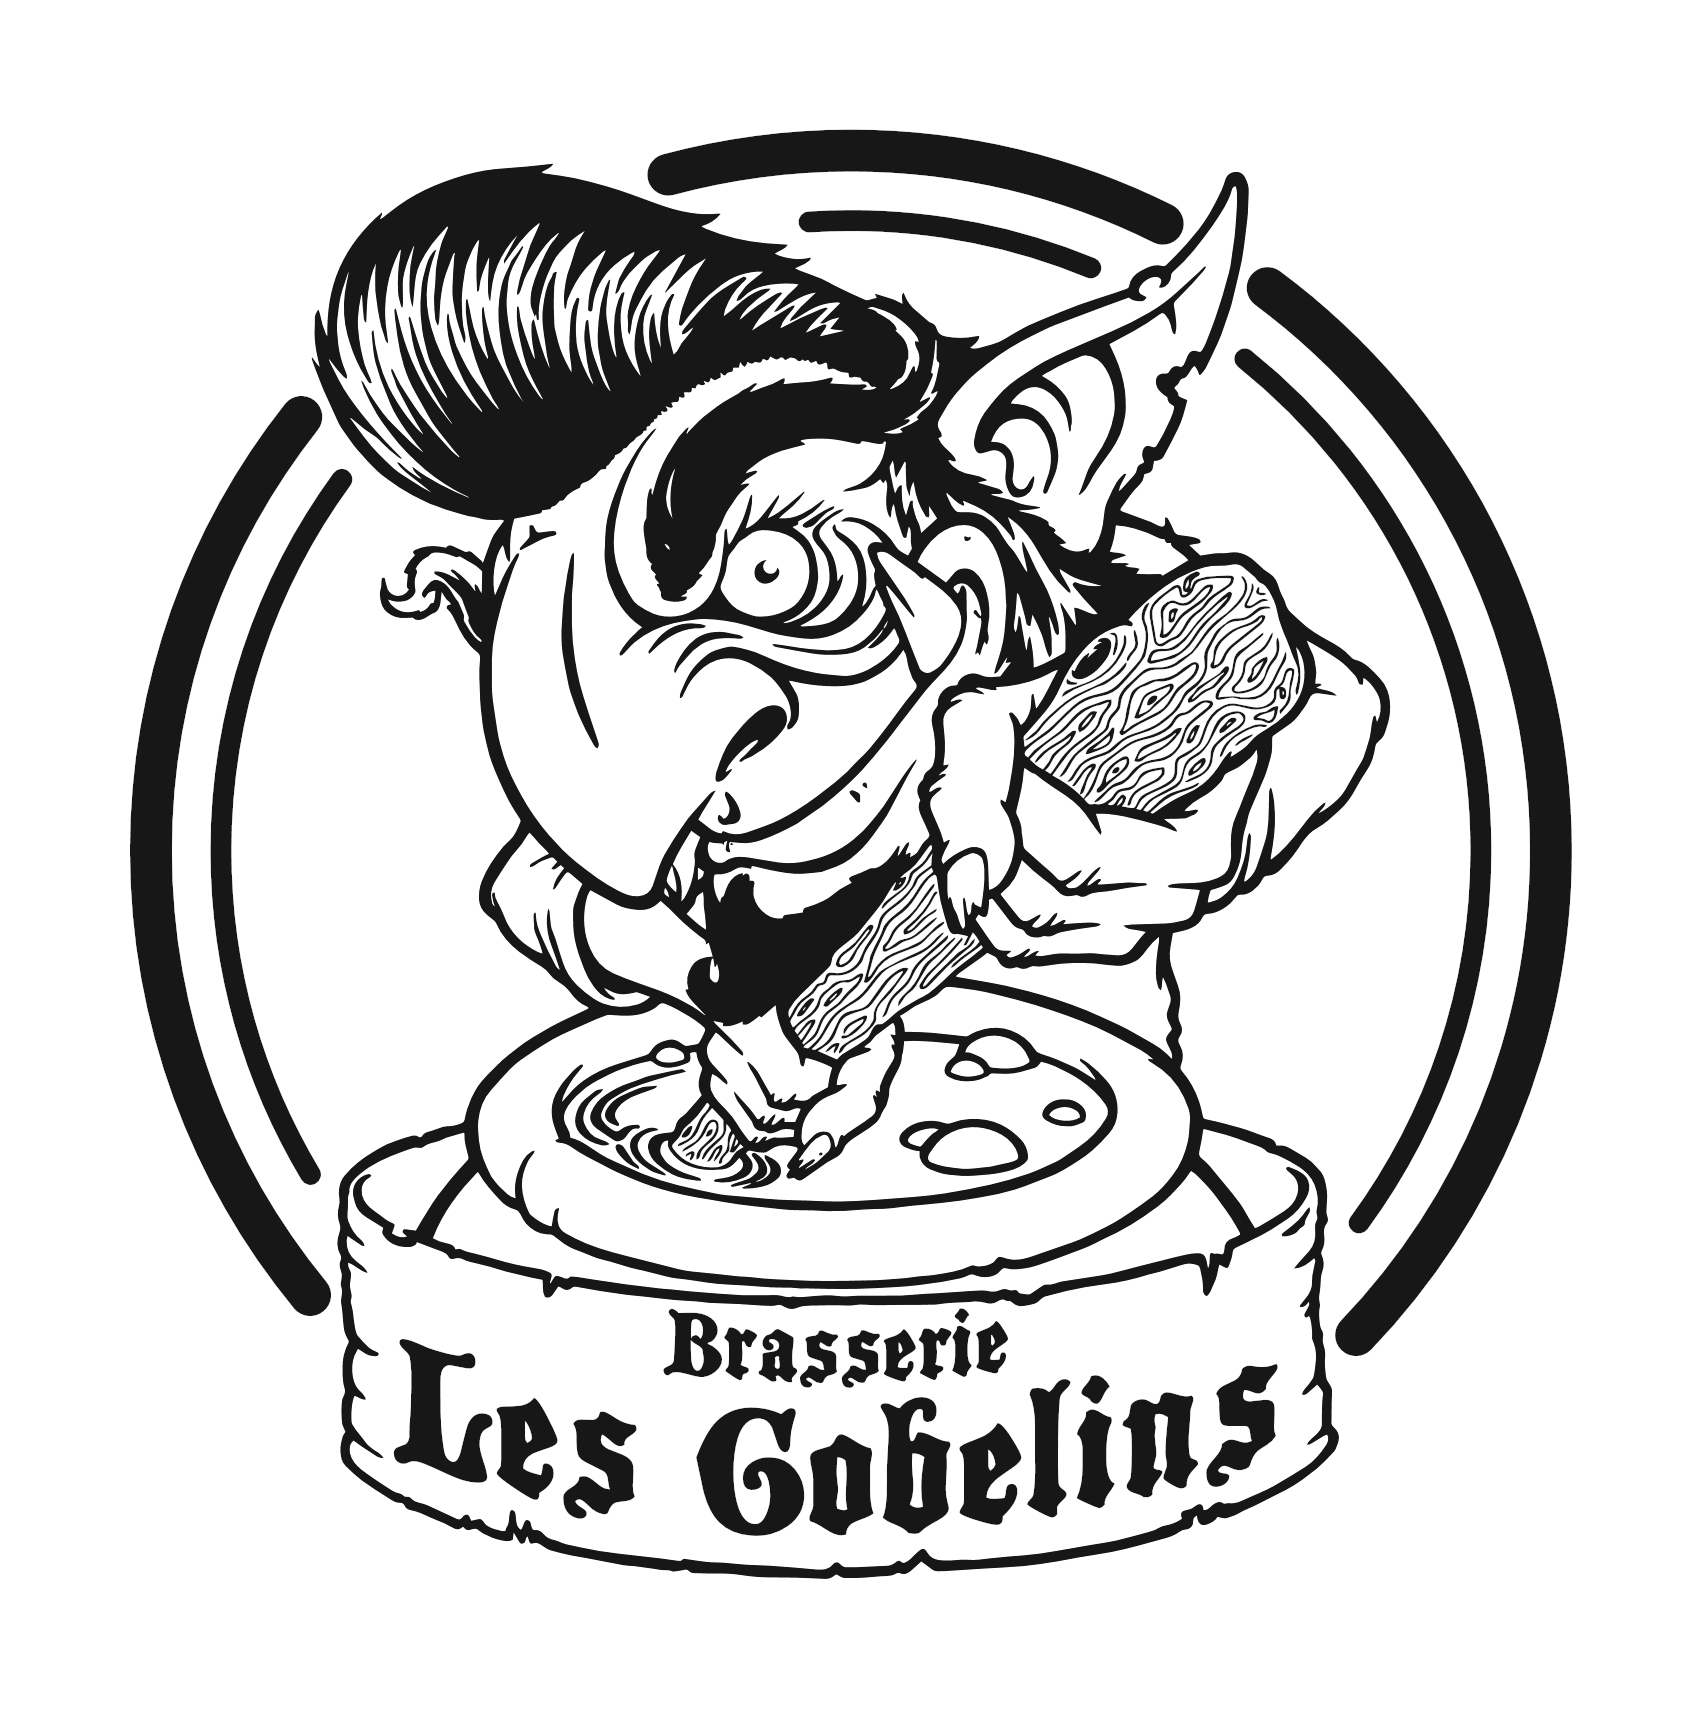 Brasserie des Gobelins